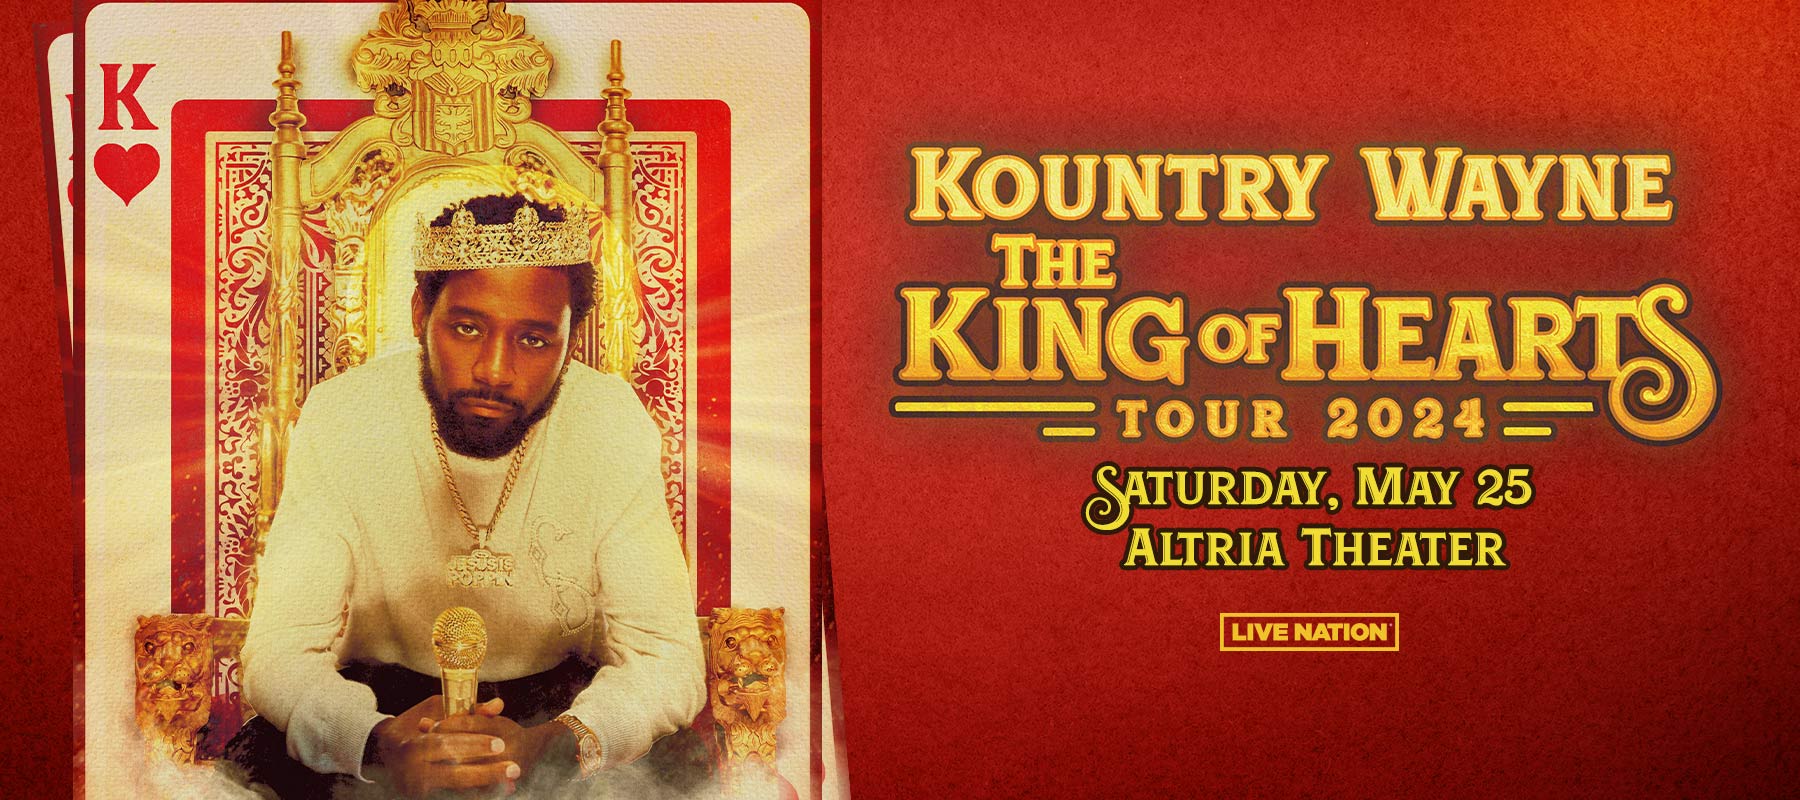 Kountry Wayne: The King of Hearts Tour